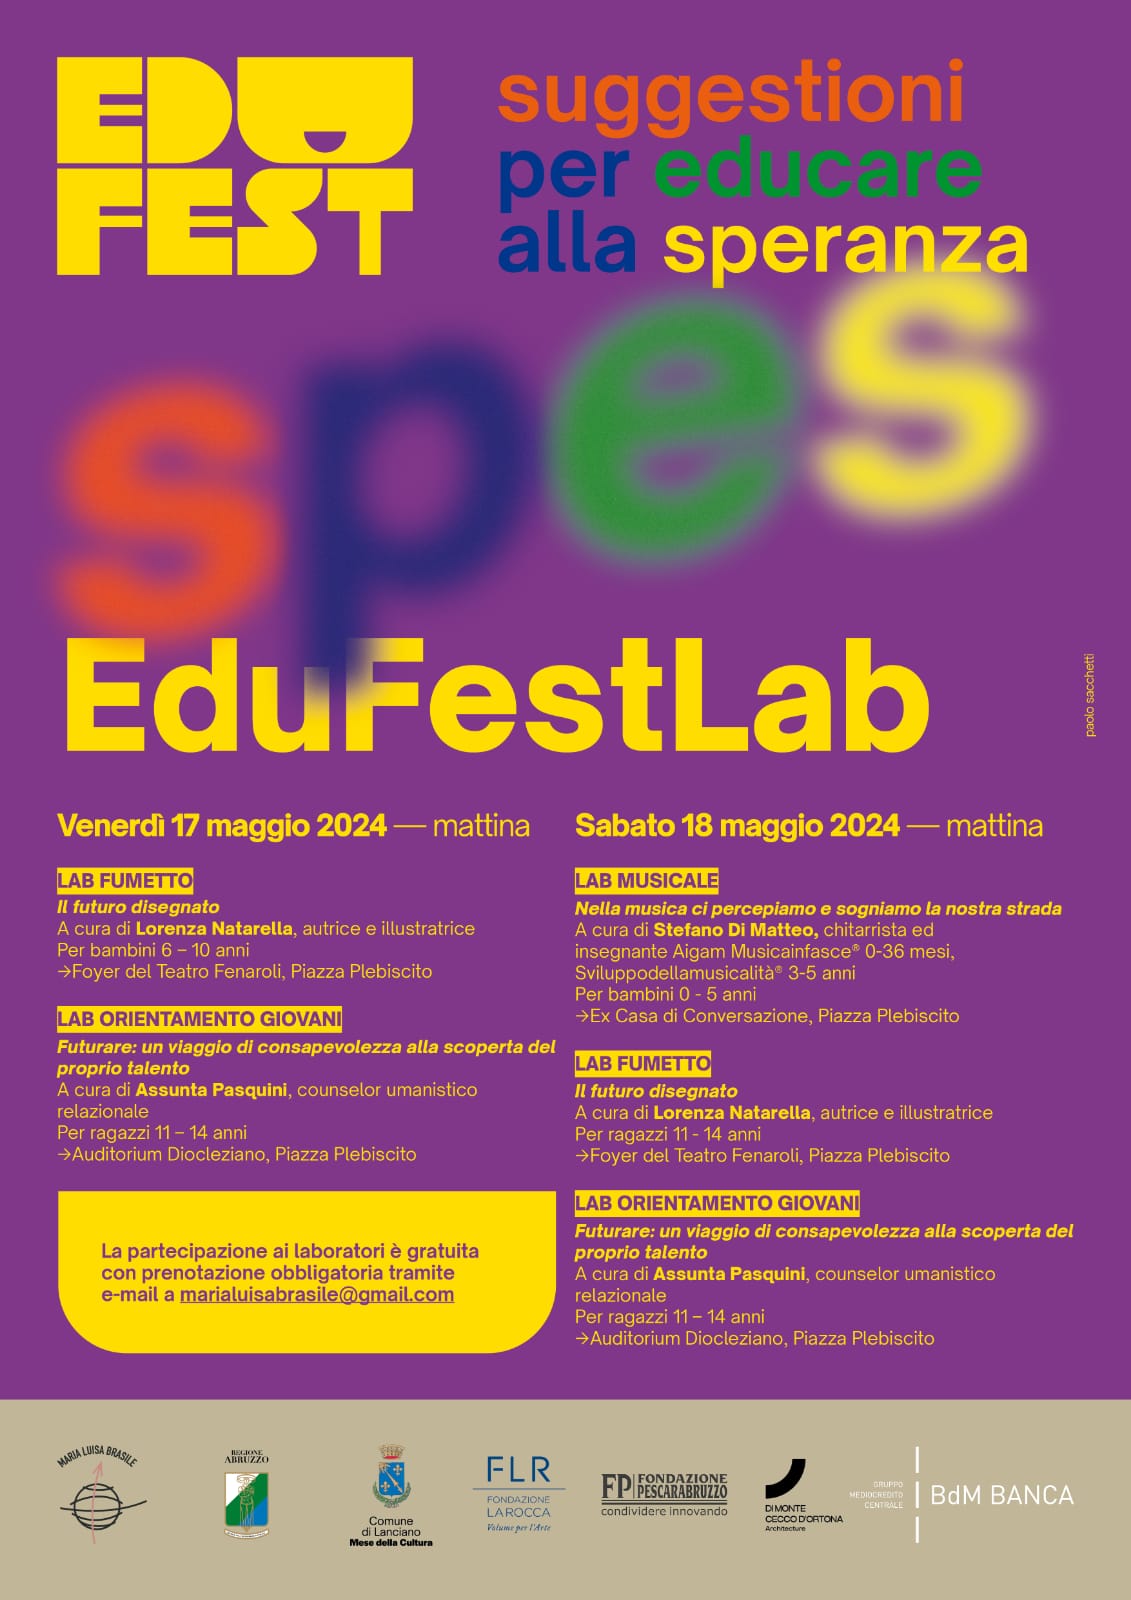 Edufest 2024 lab - III° Festival dell'educazione: SPES